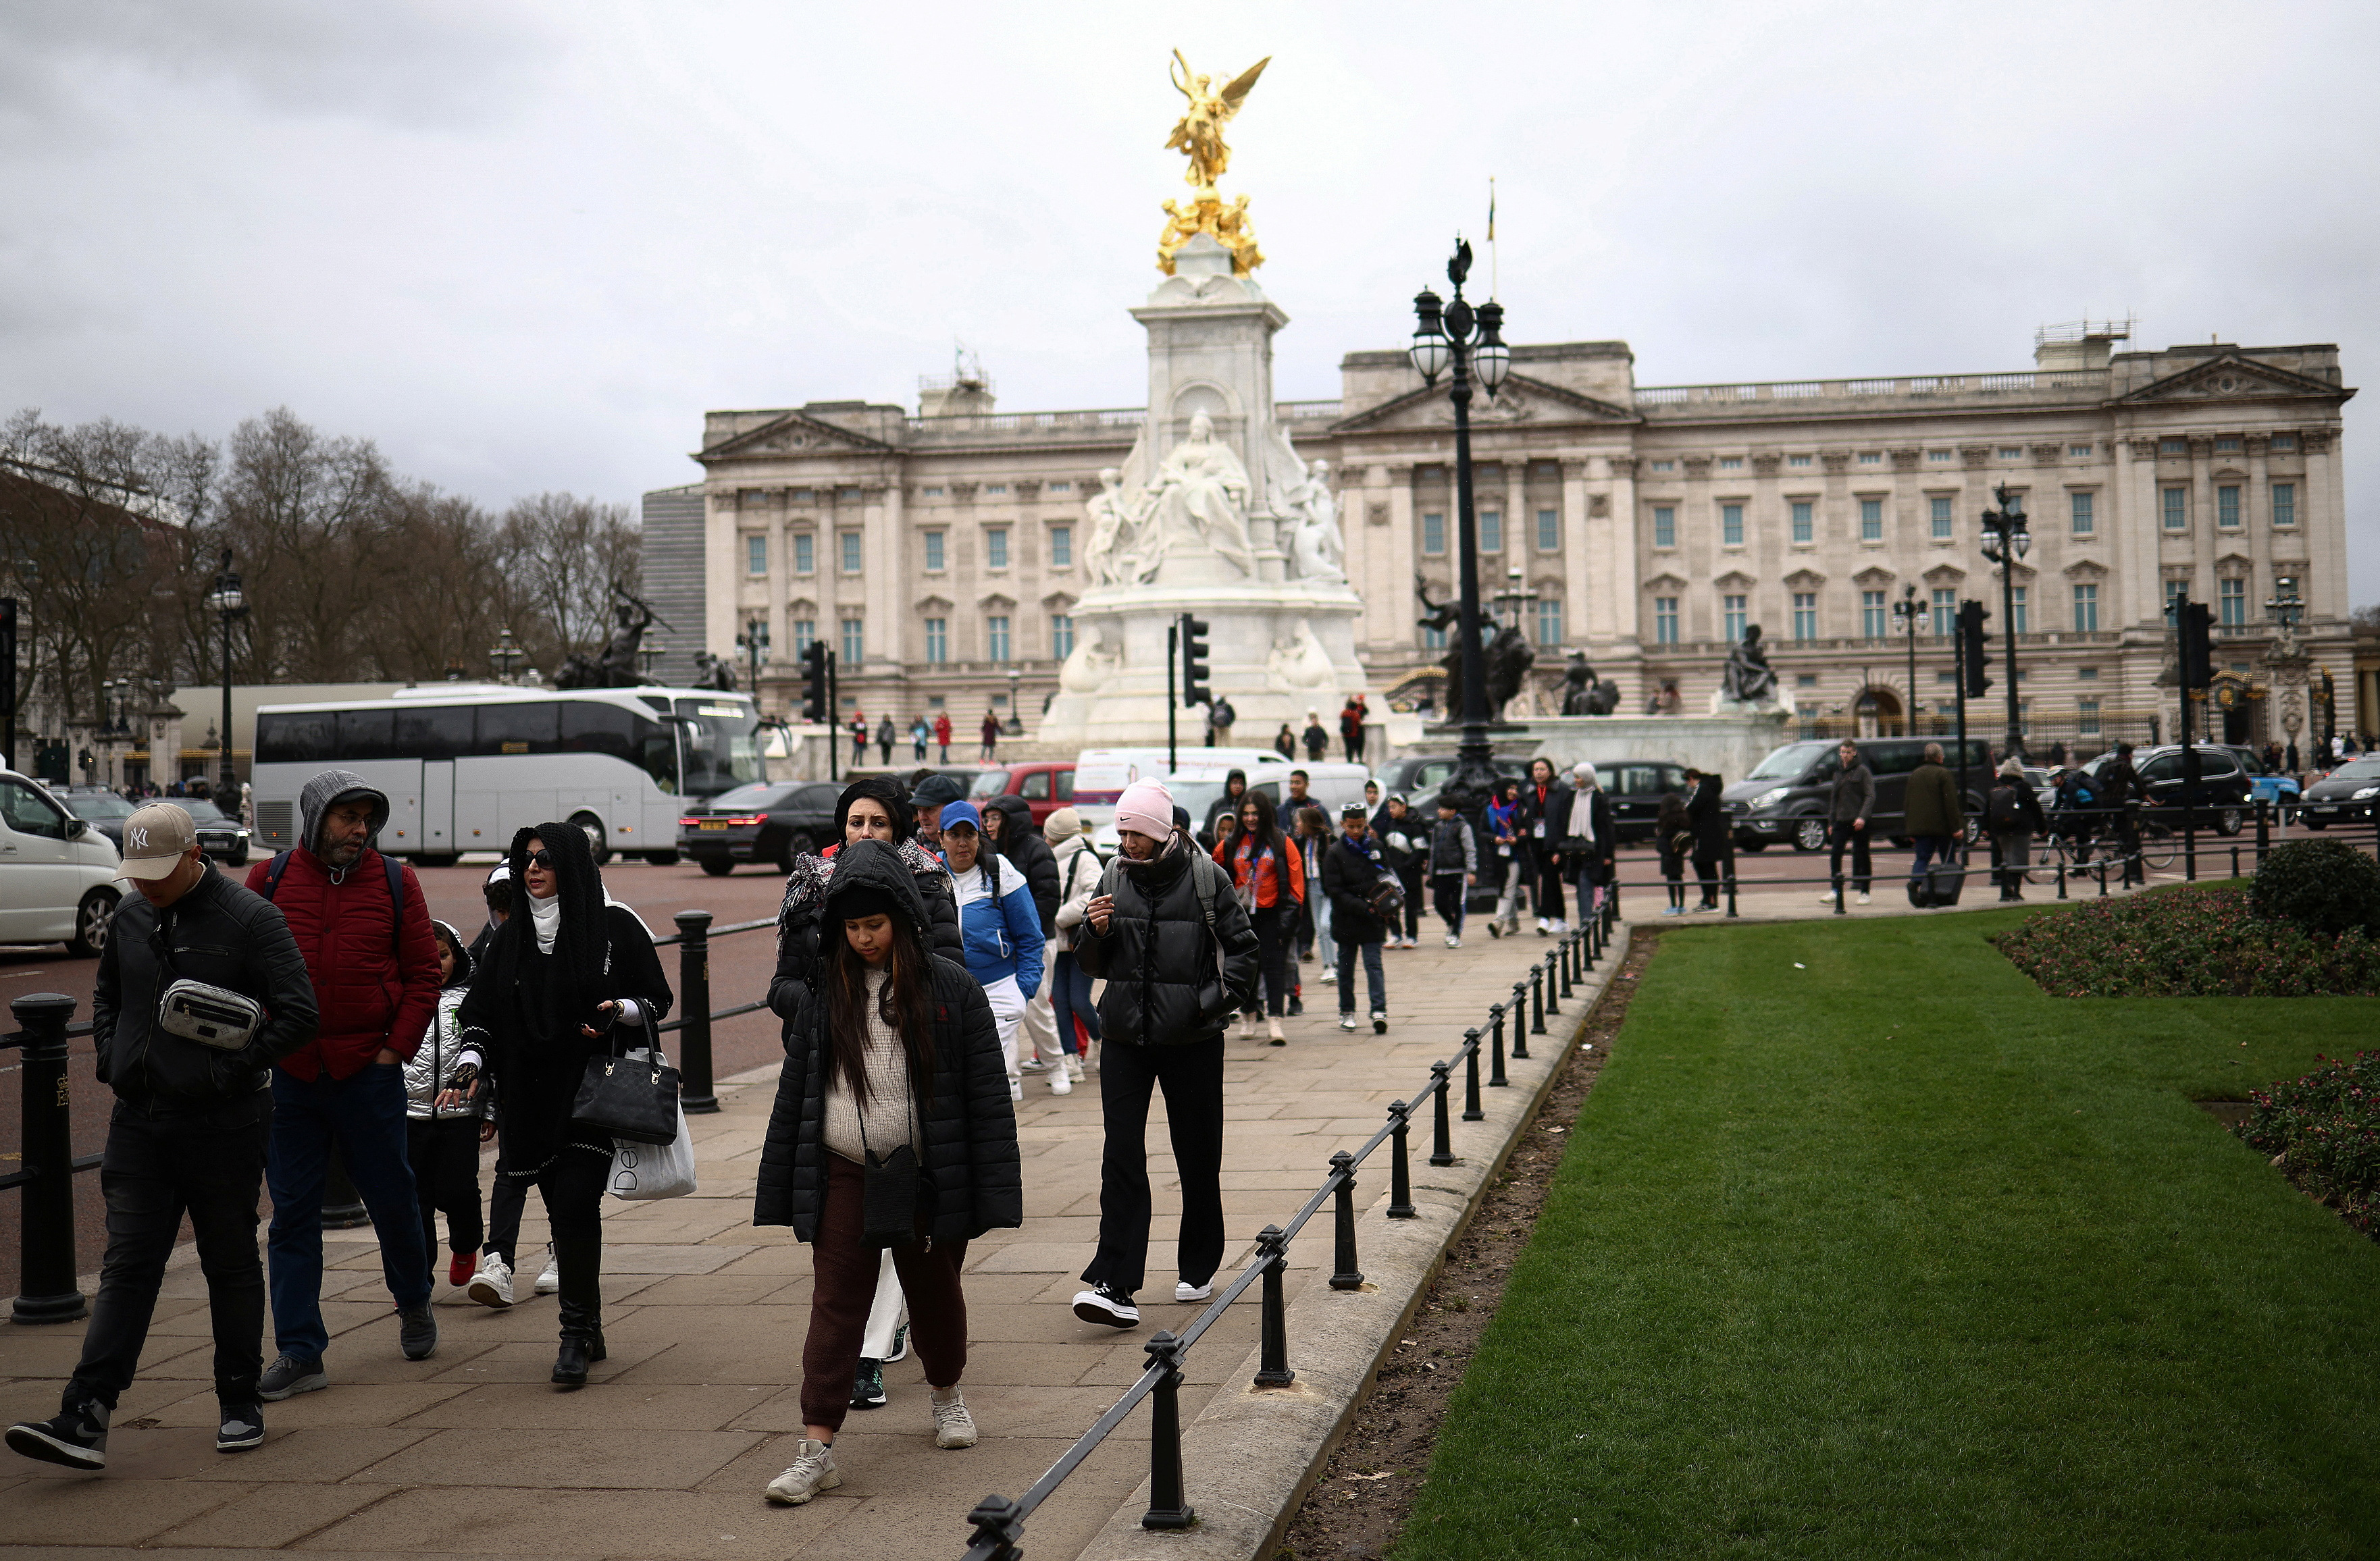 Tourists visit Buckingham Palace in London